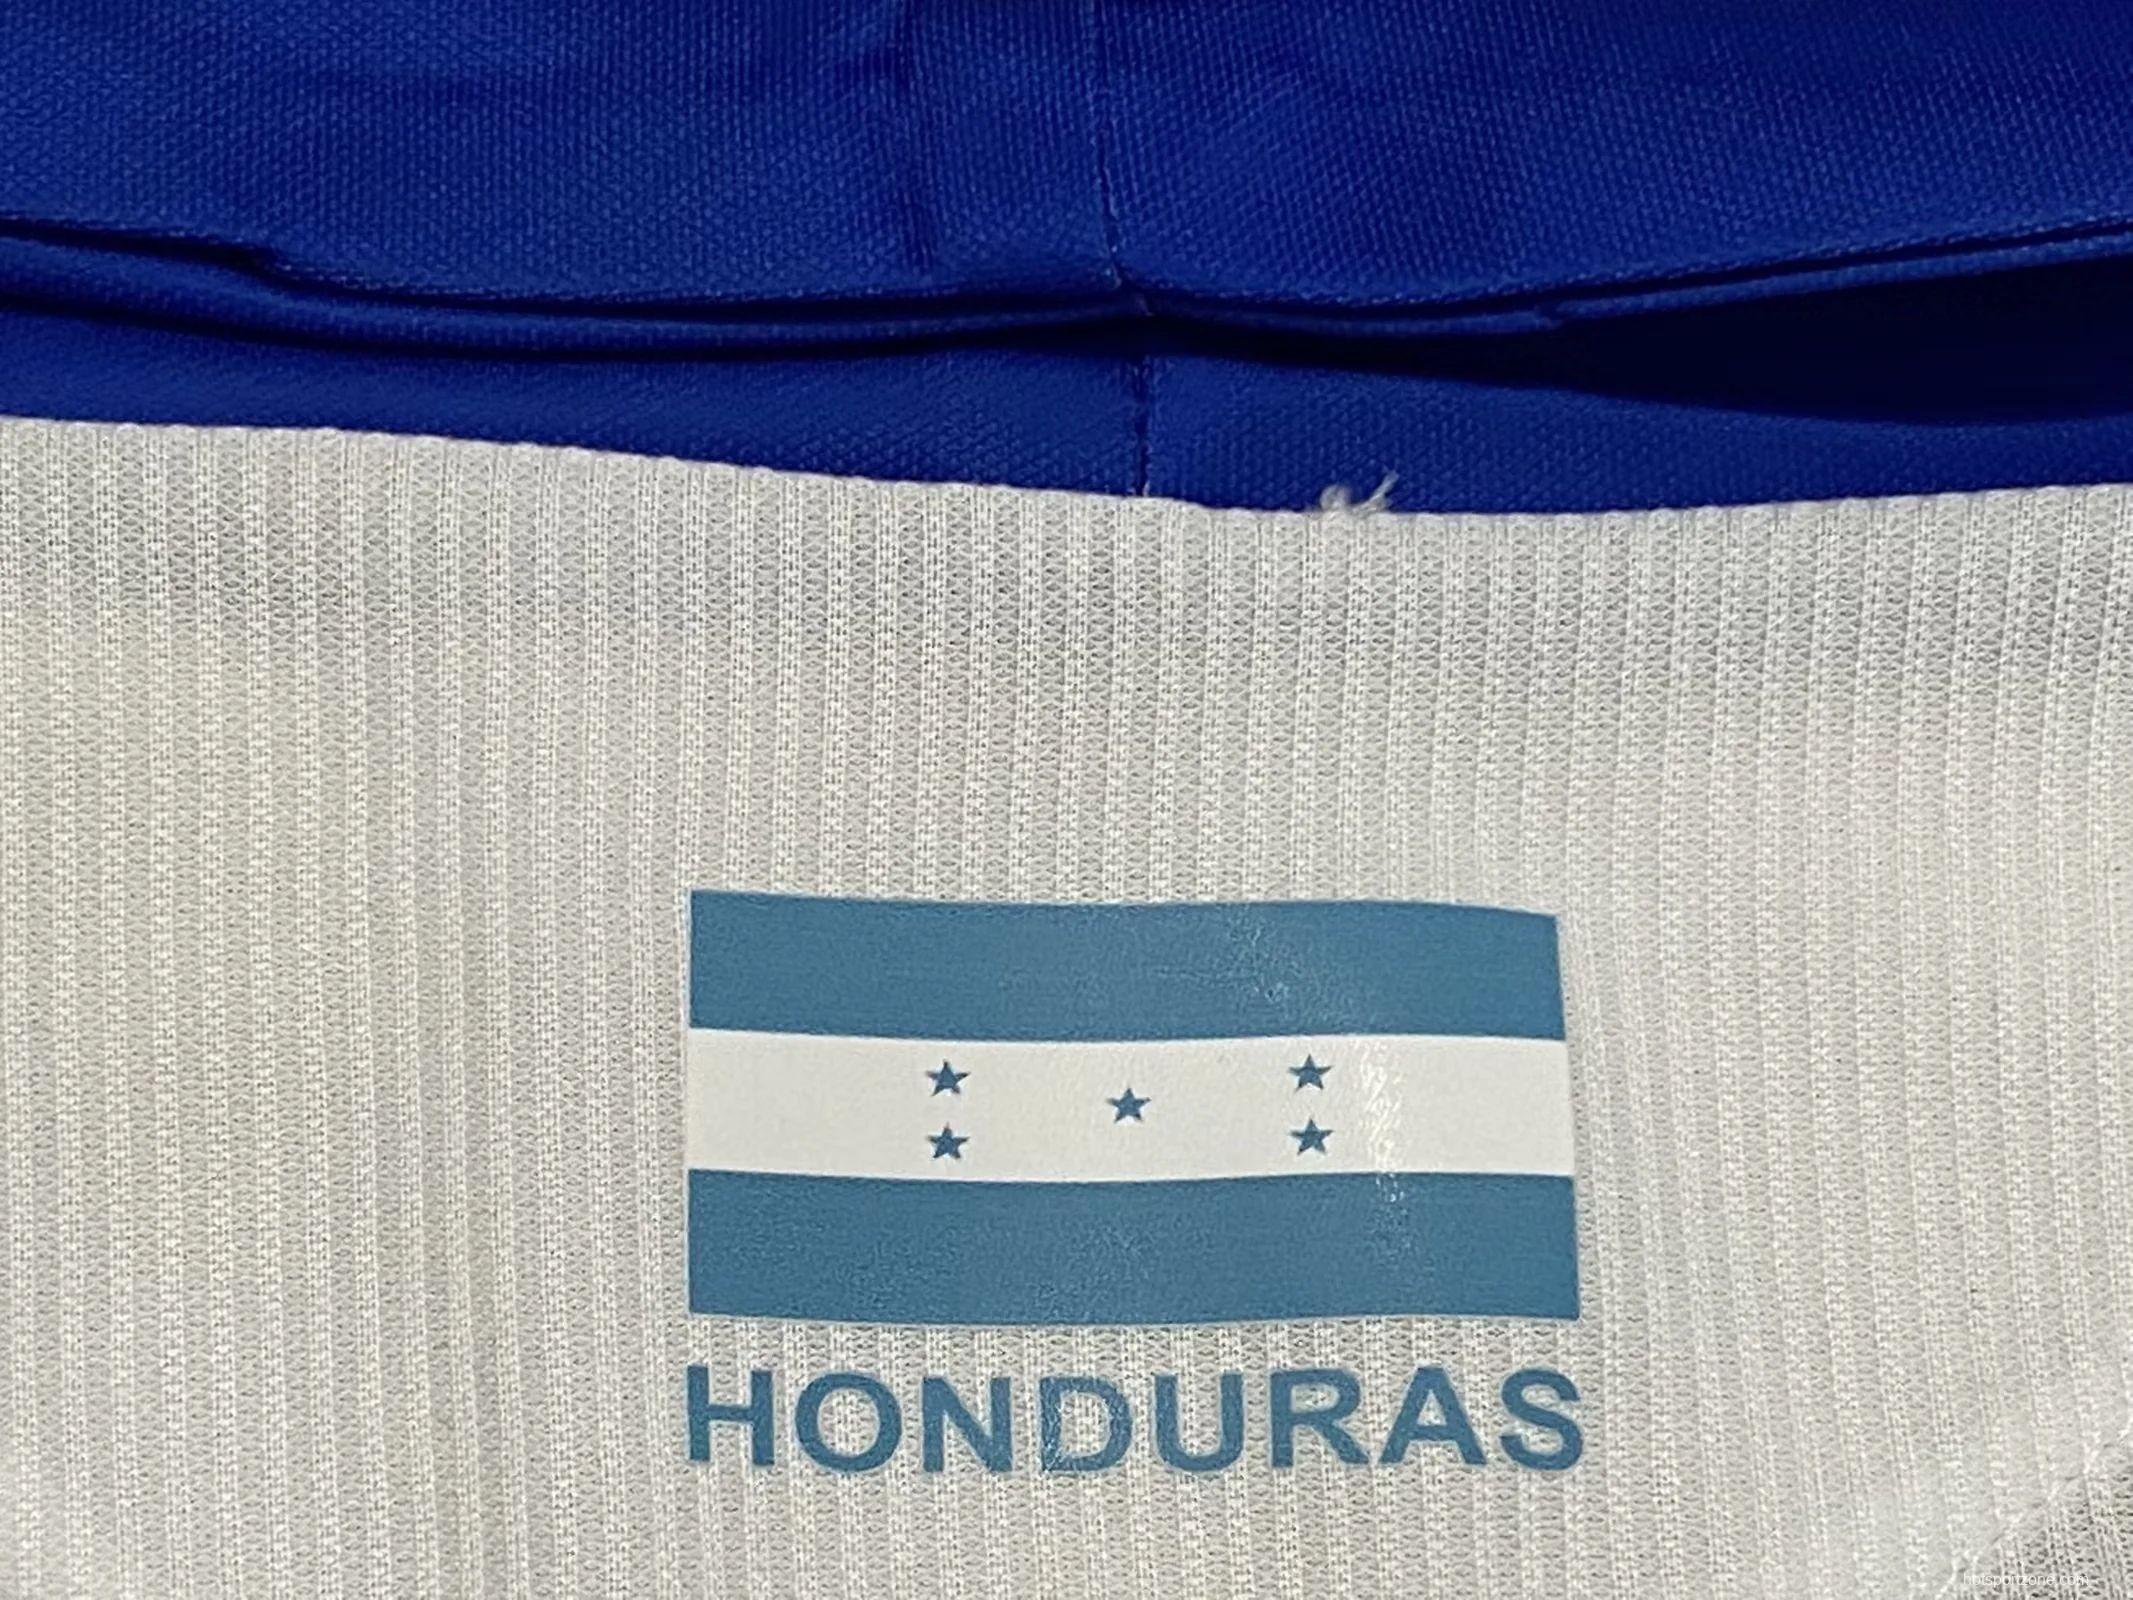 2023 Honduras Home Jersey